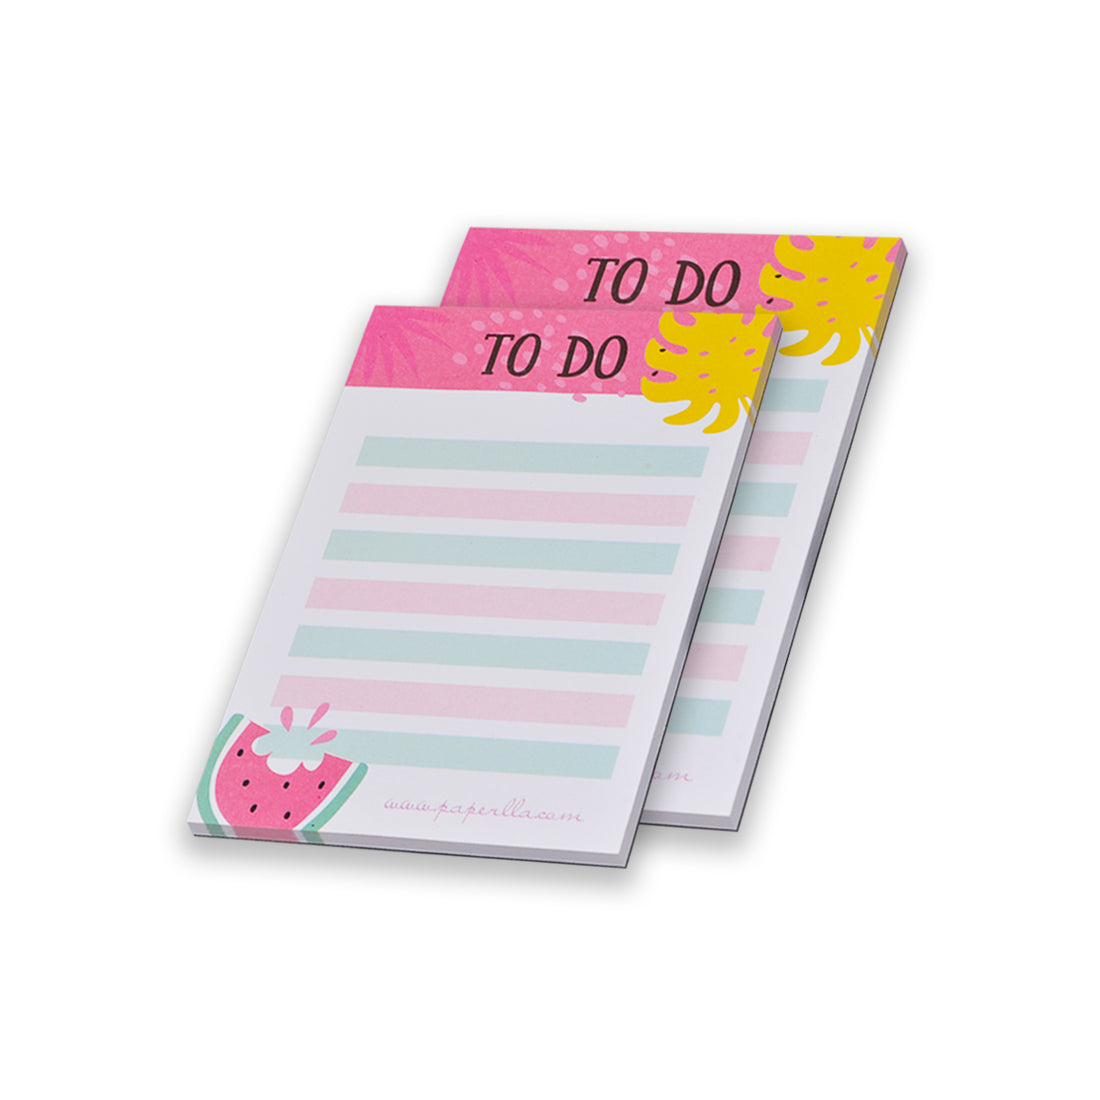 To Do List Notebook Planner Online